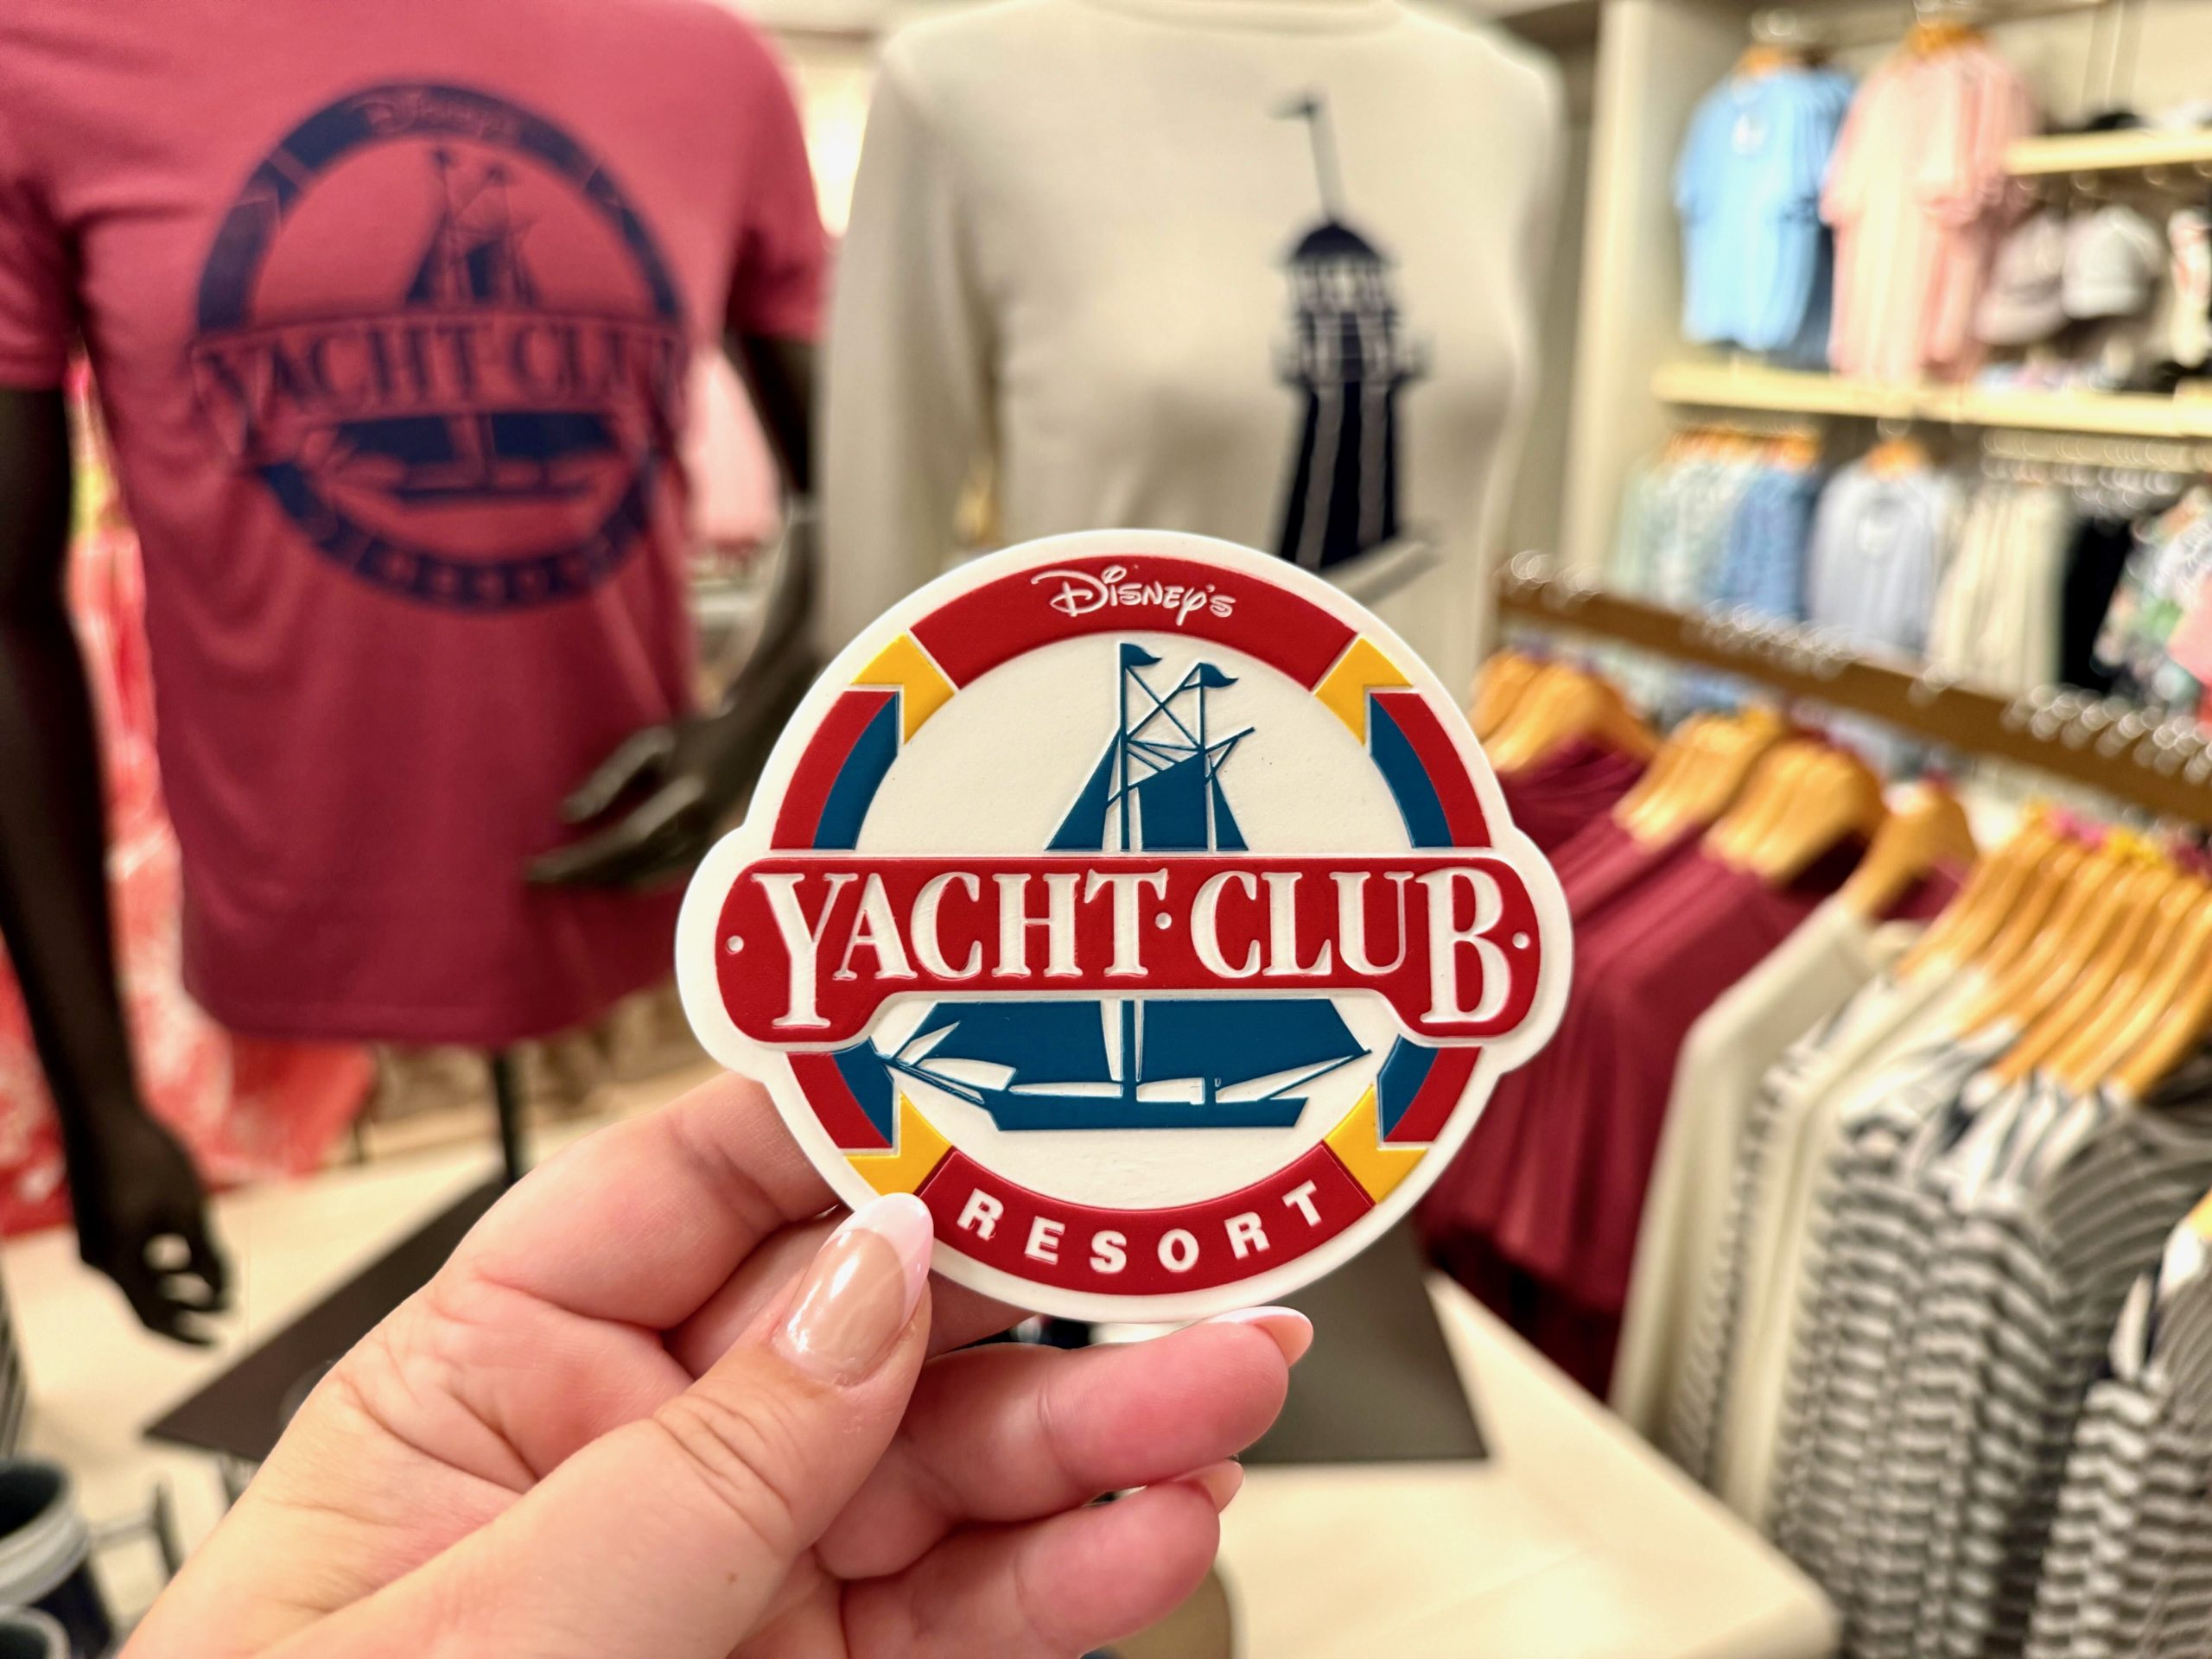 Disney's Yacht Club Resort Merchandise